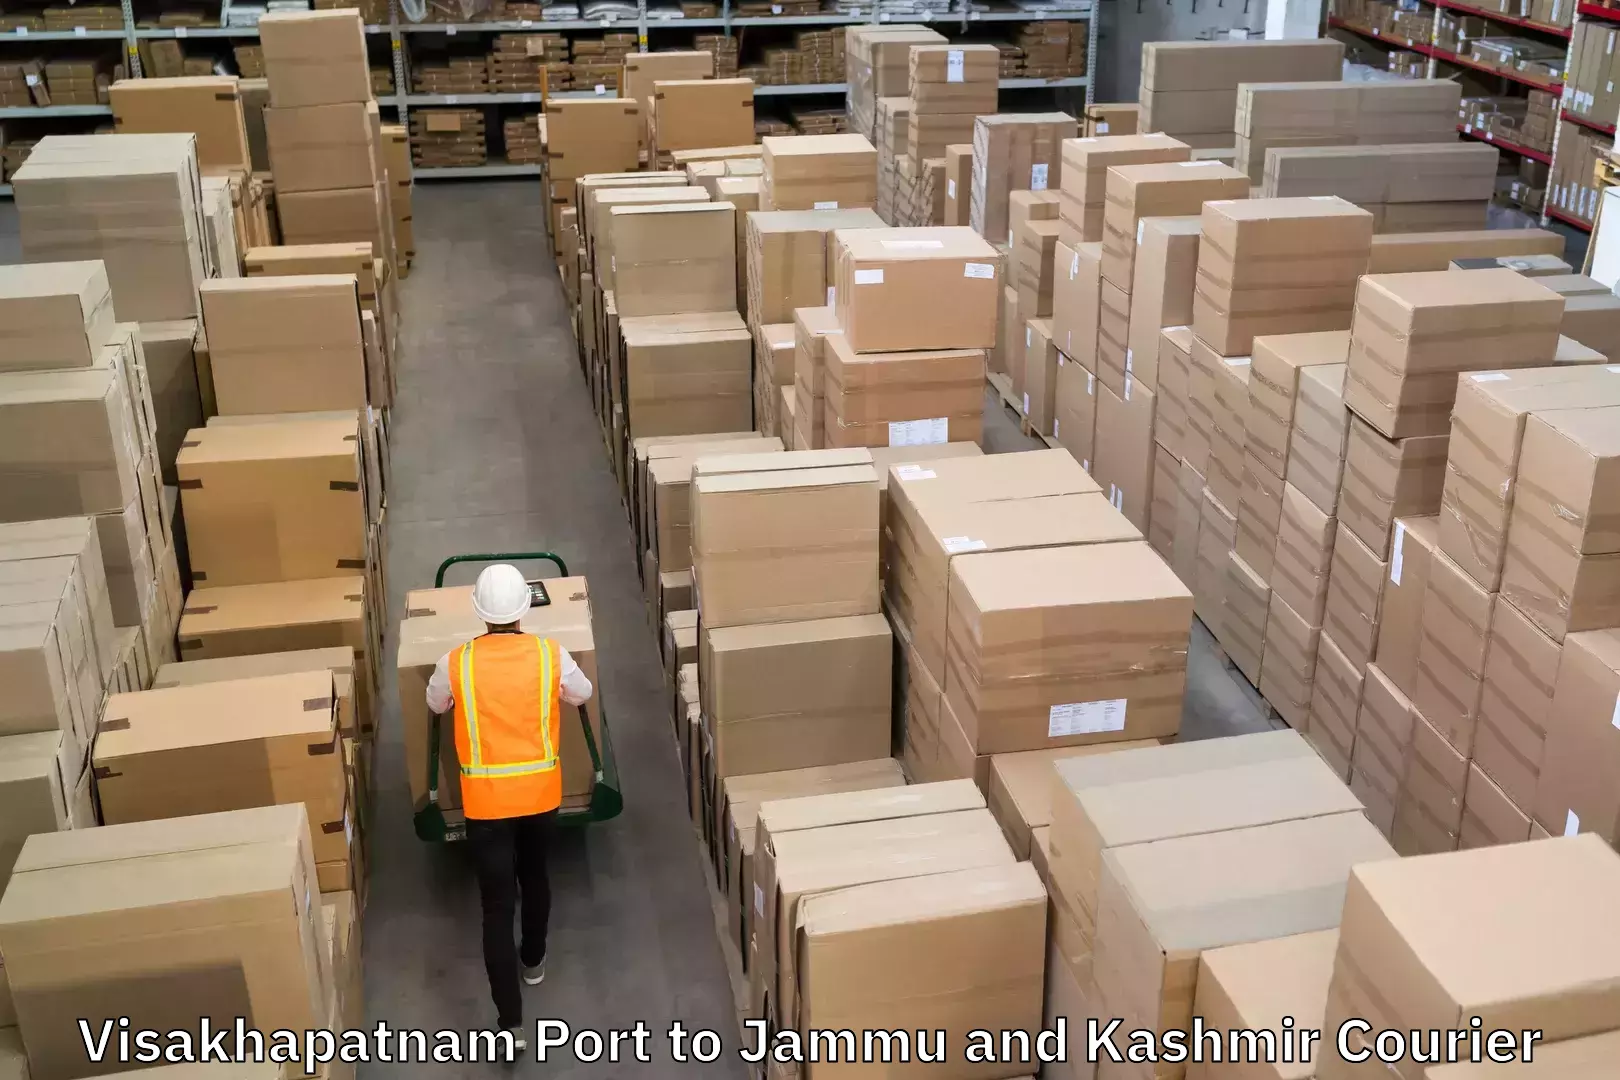 Express logistics service Visakhapatnam Port to Jammu and Kashmir